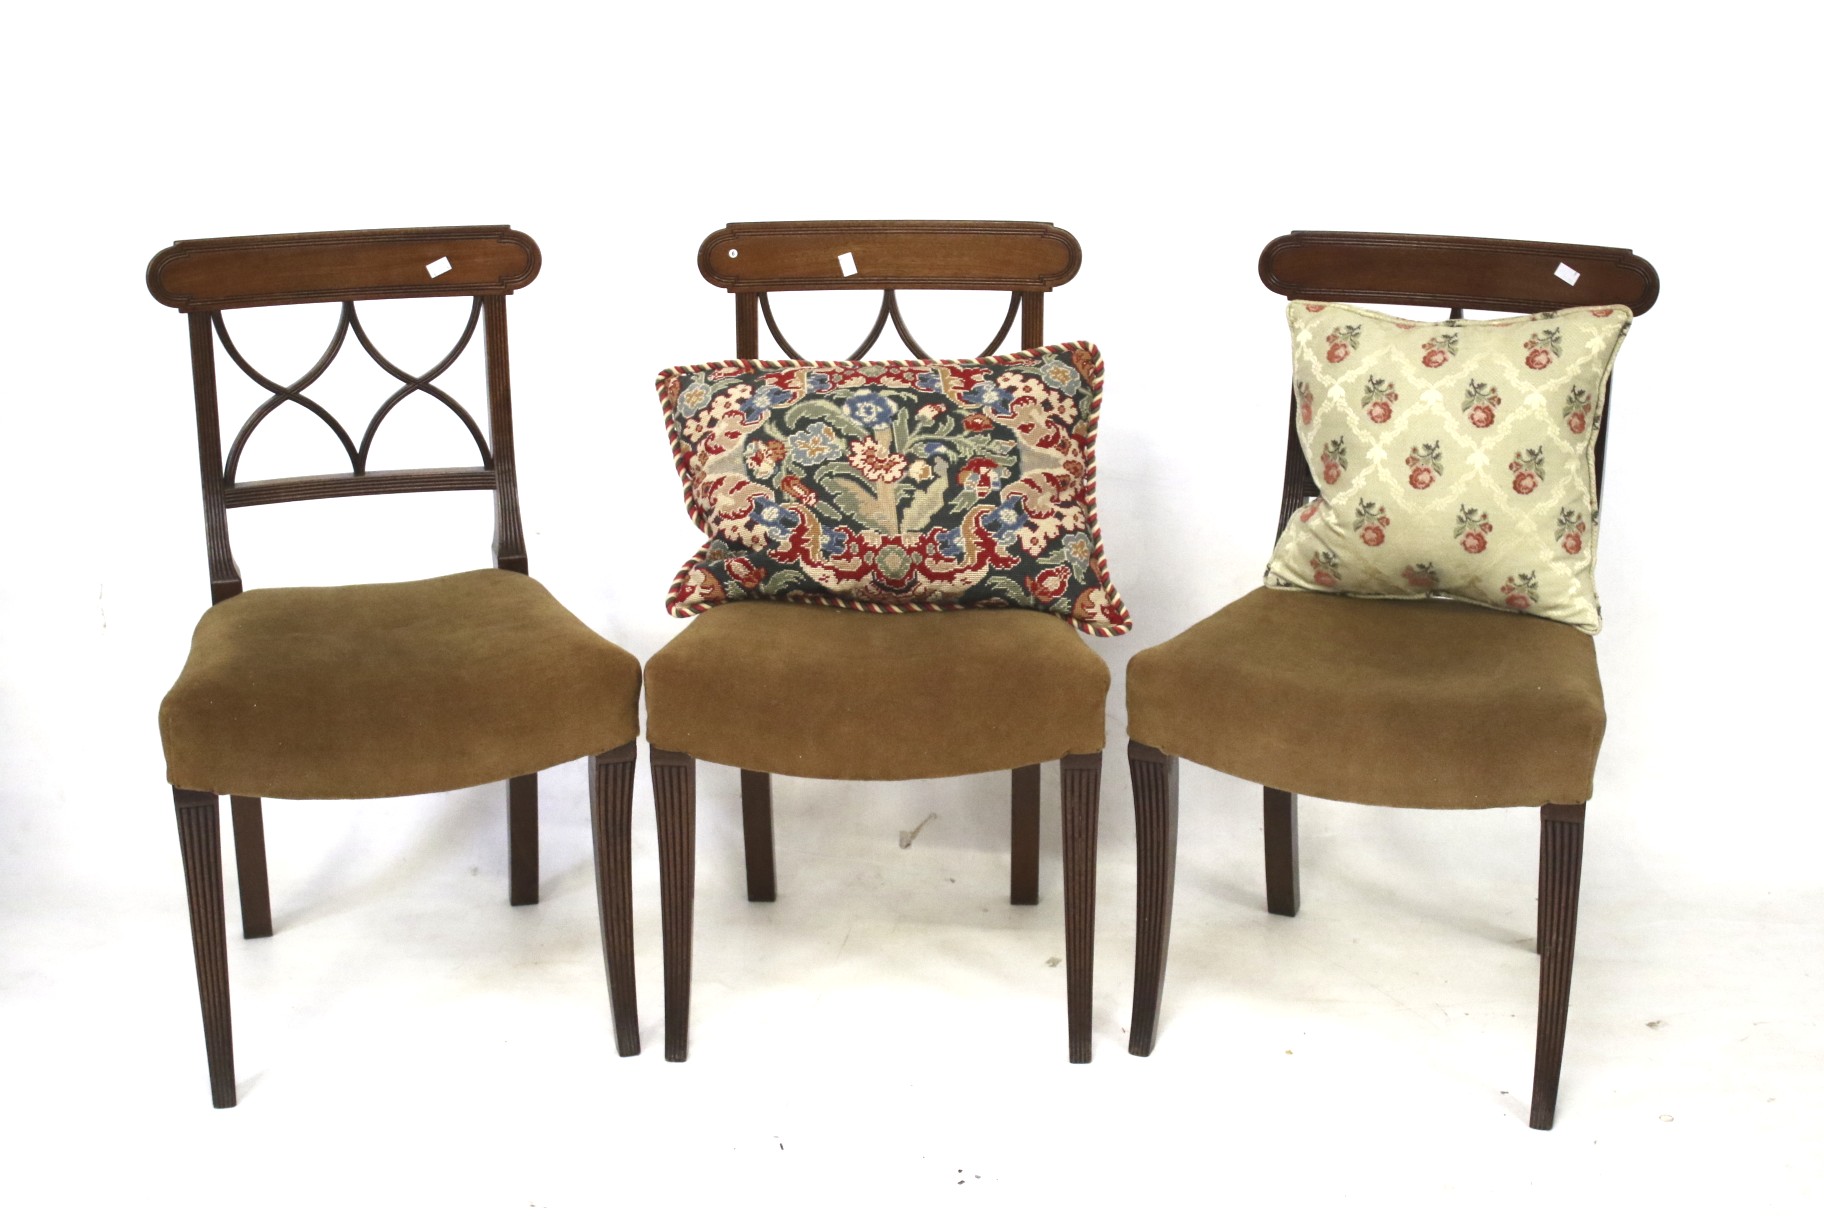 A set of three early 19th century mahogany dining chairs.